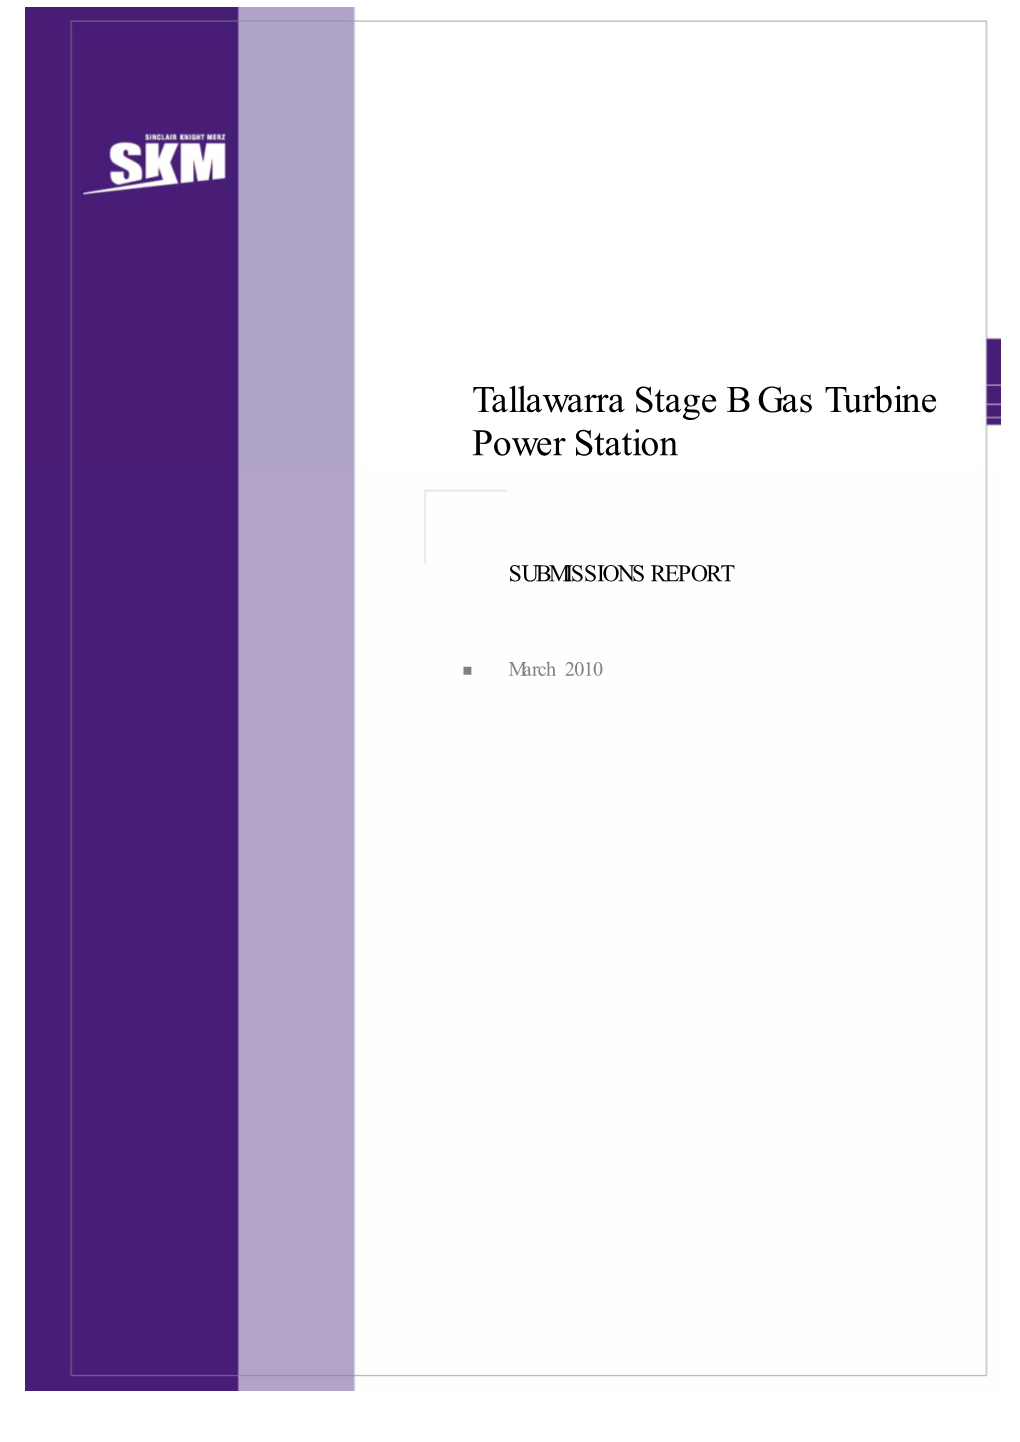 Tallawarra Stage B Gas Turbine Power Station